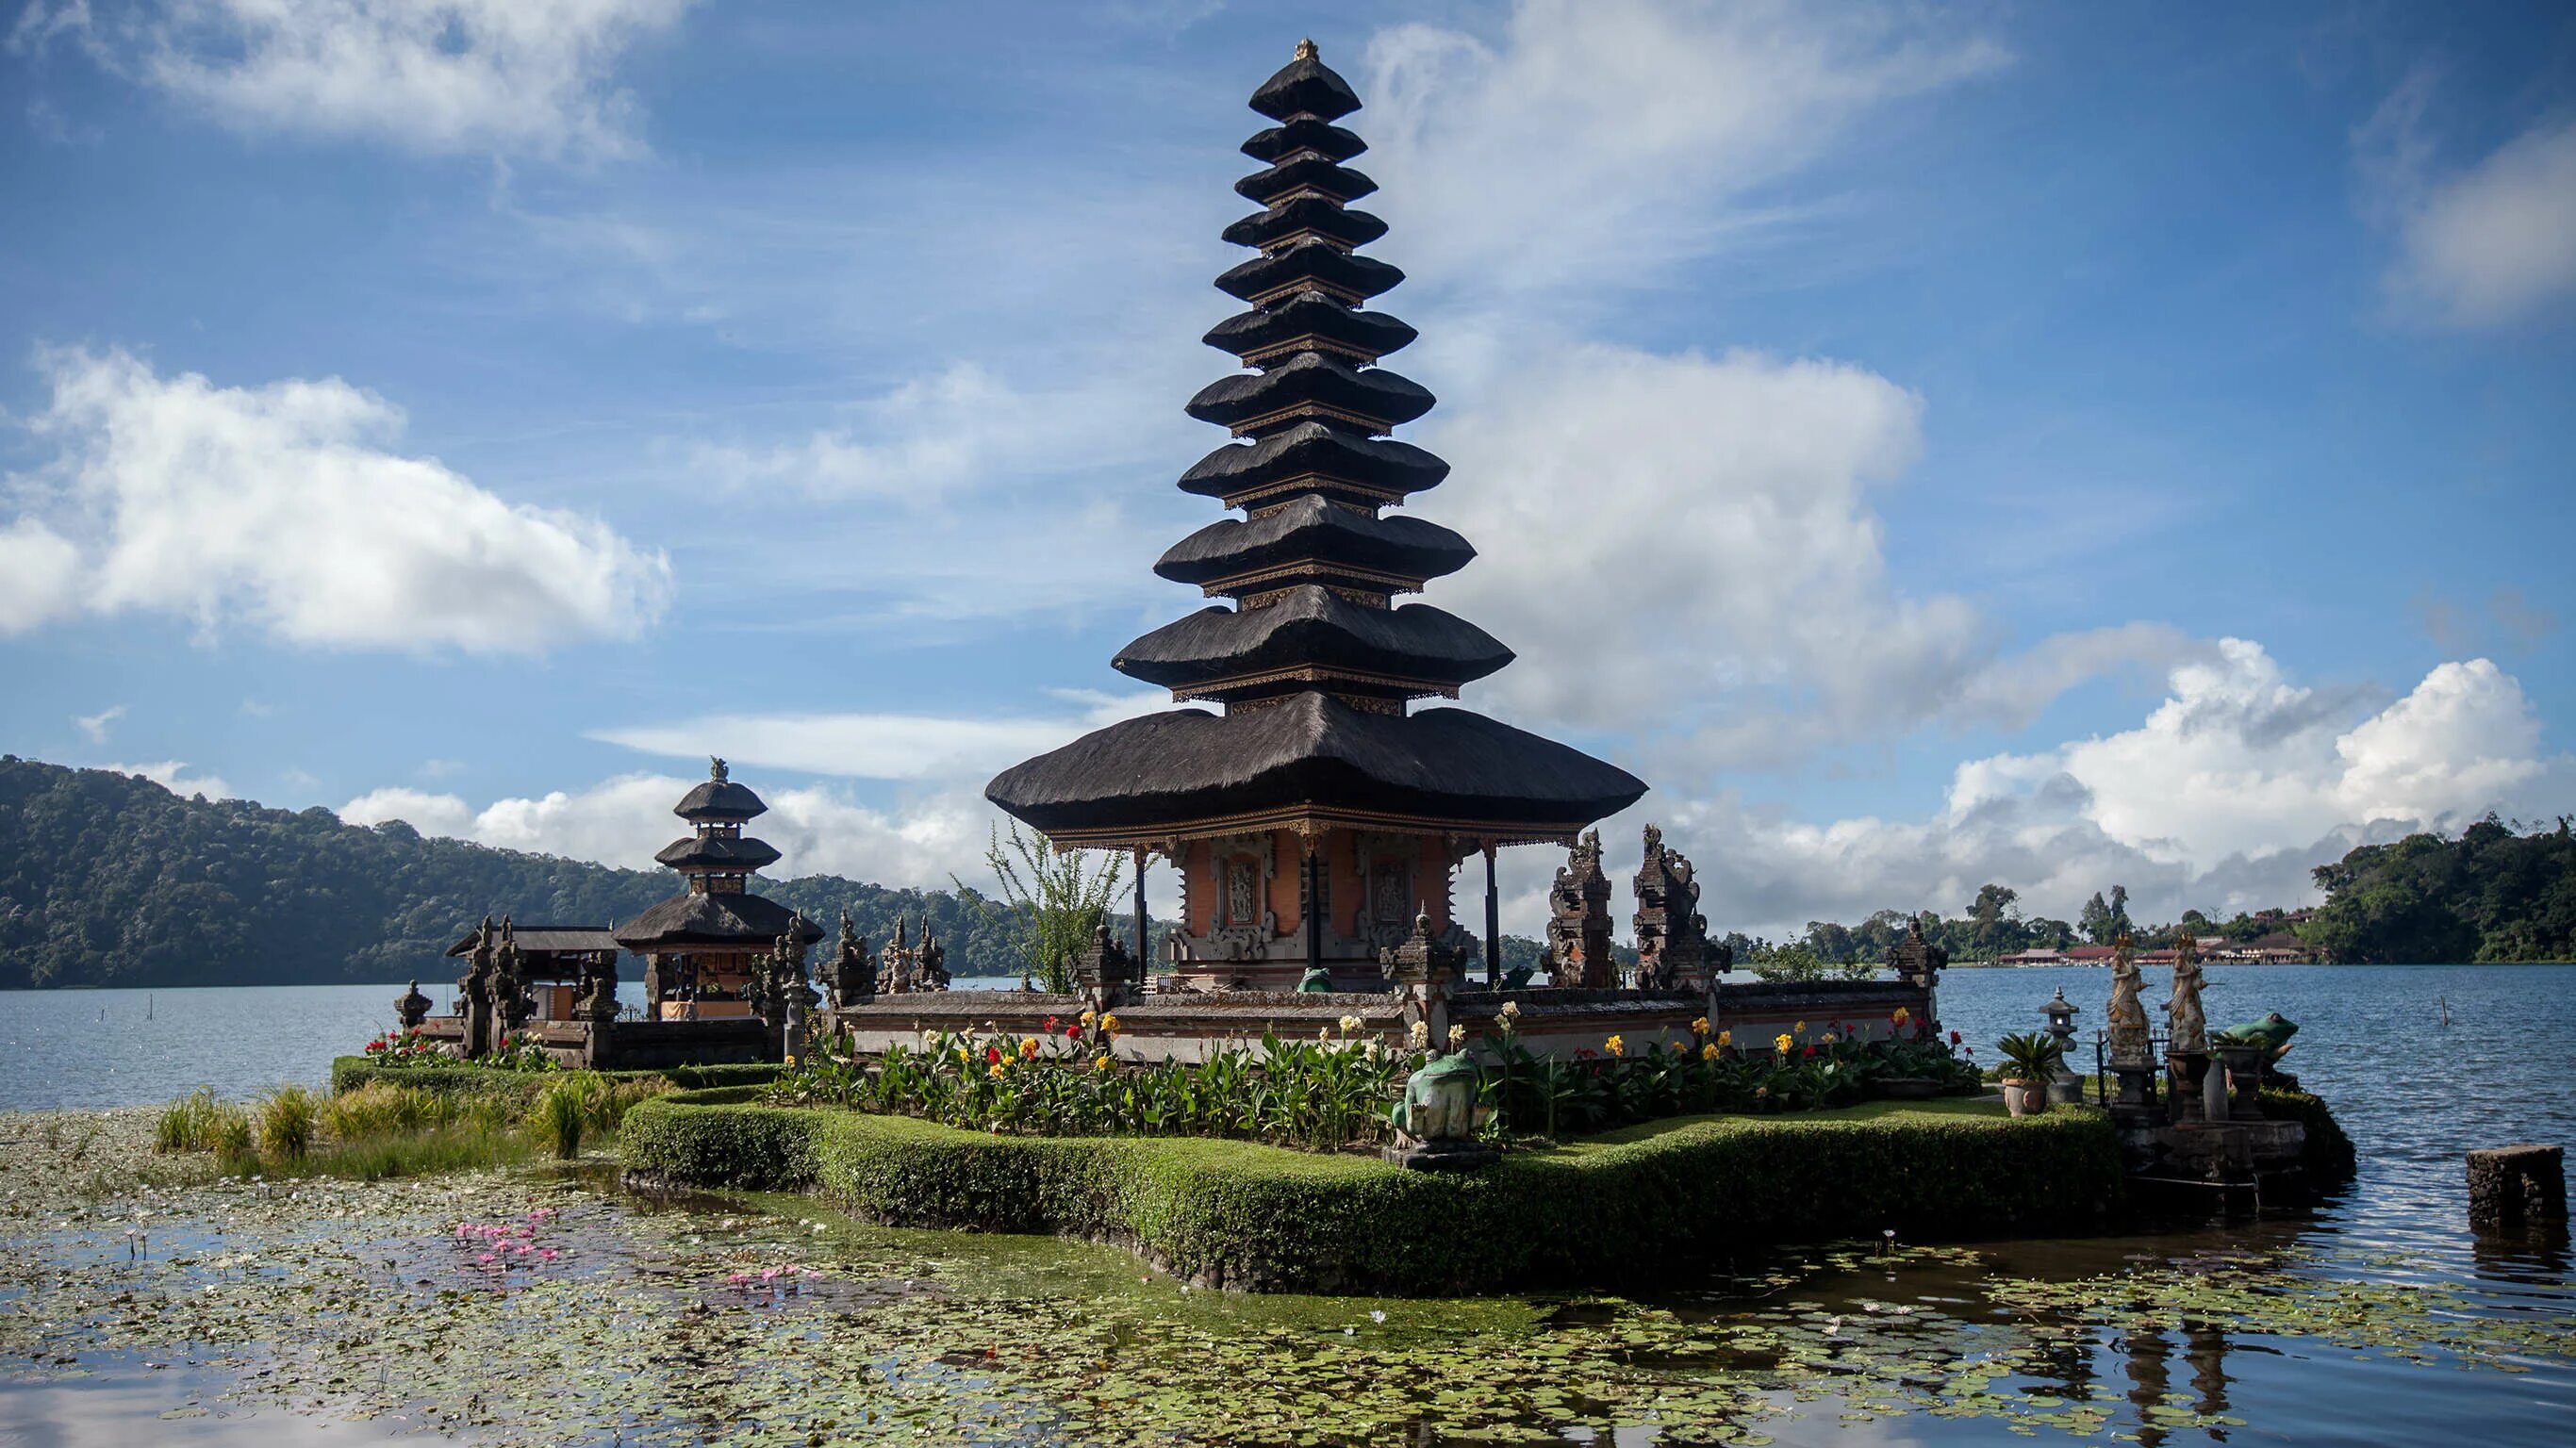 Камеры бали. Храм улун дану Батур. Индонезия Бали. Бали и Ломбок. Генггонг (Бали).